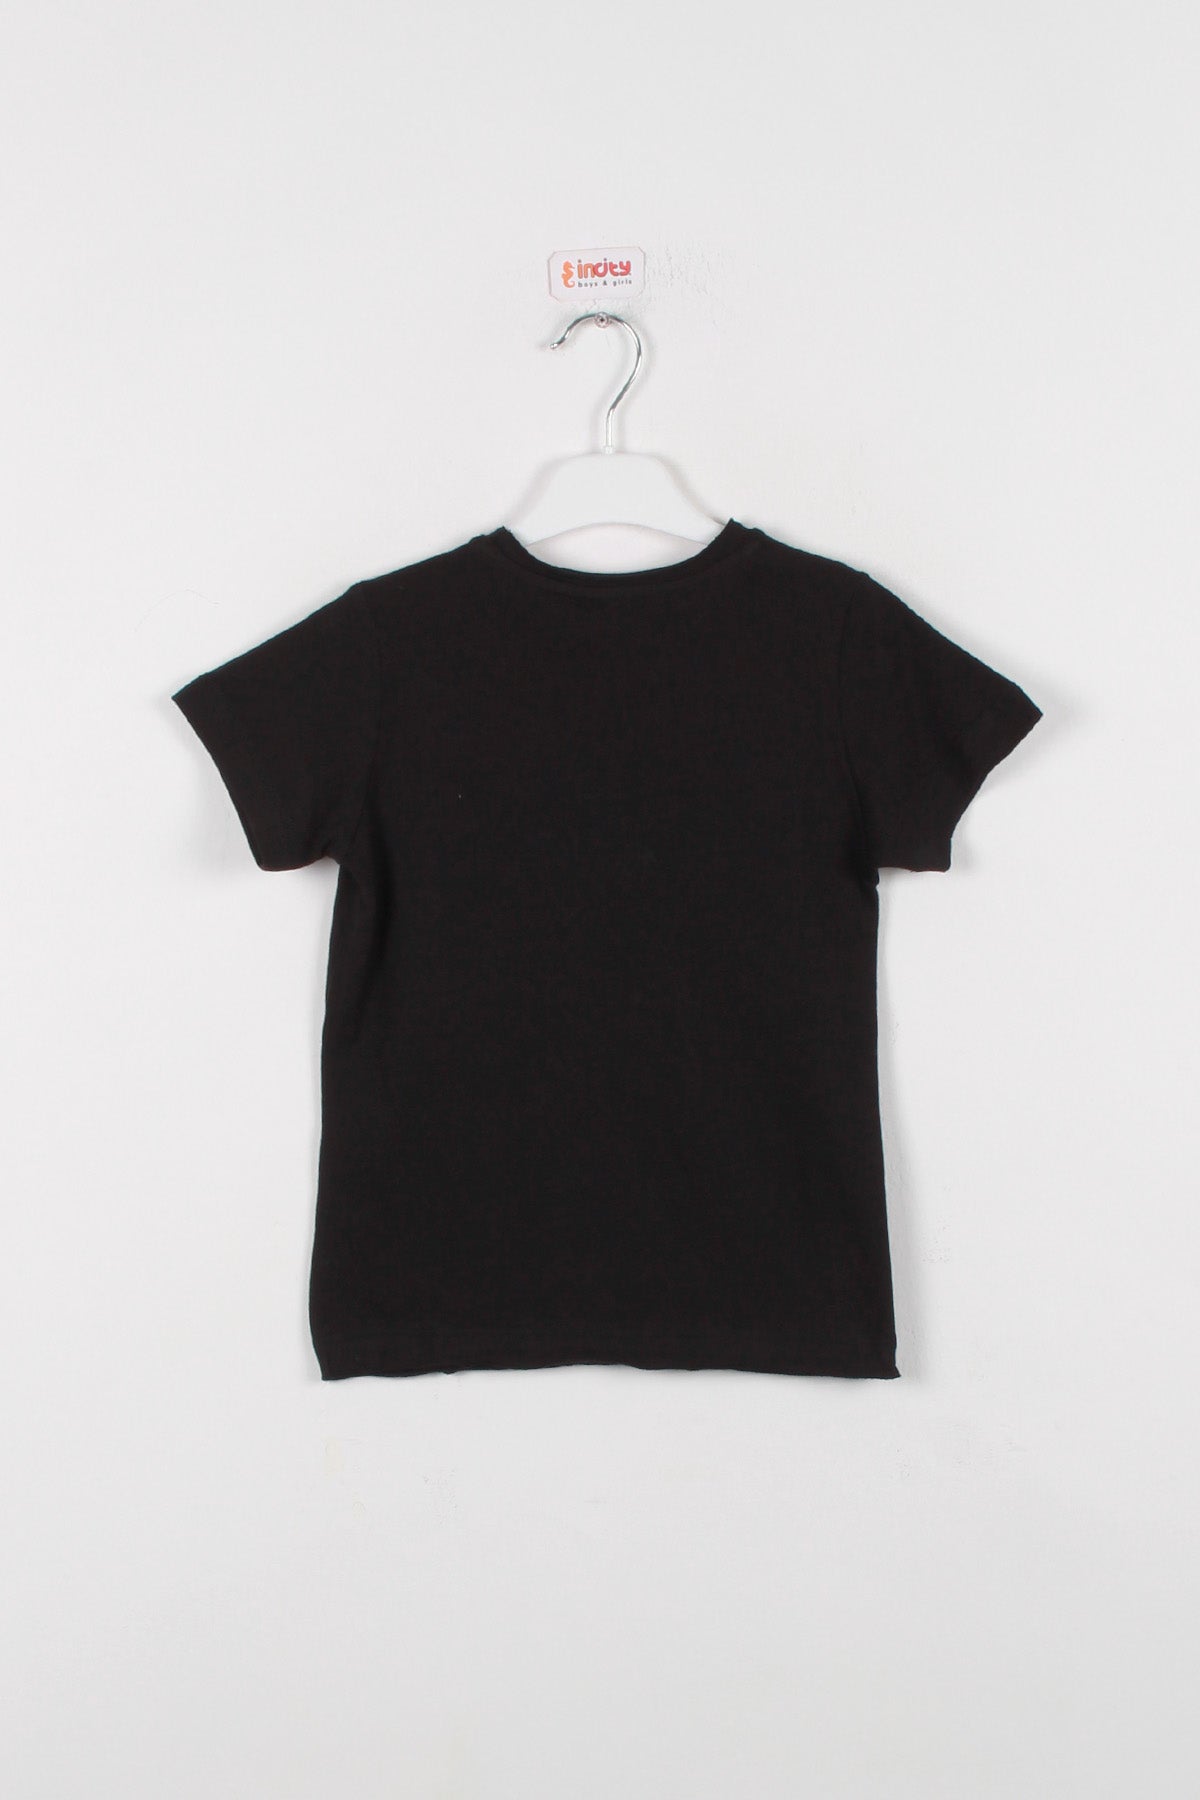 InCity Kids Boys Round Plain Short Neck Solid T-Shirt Basic Sleeve